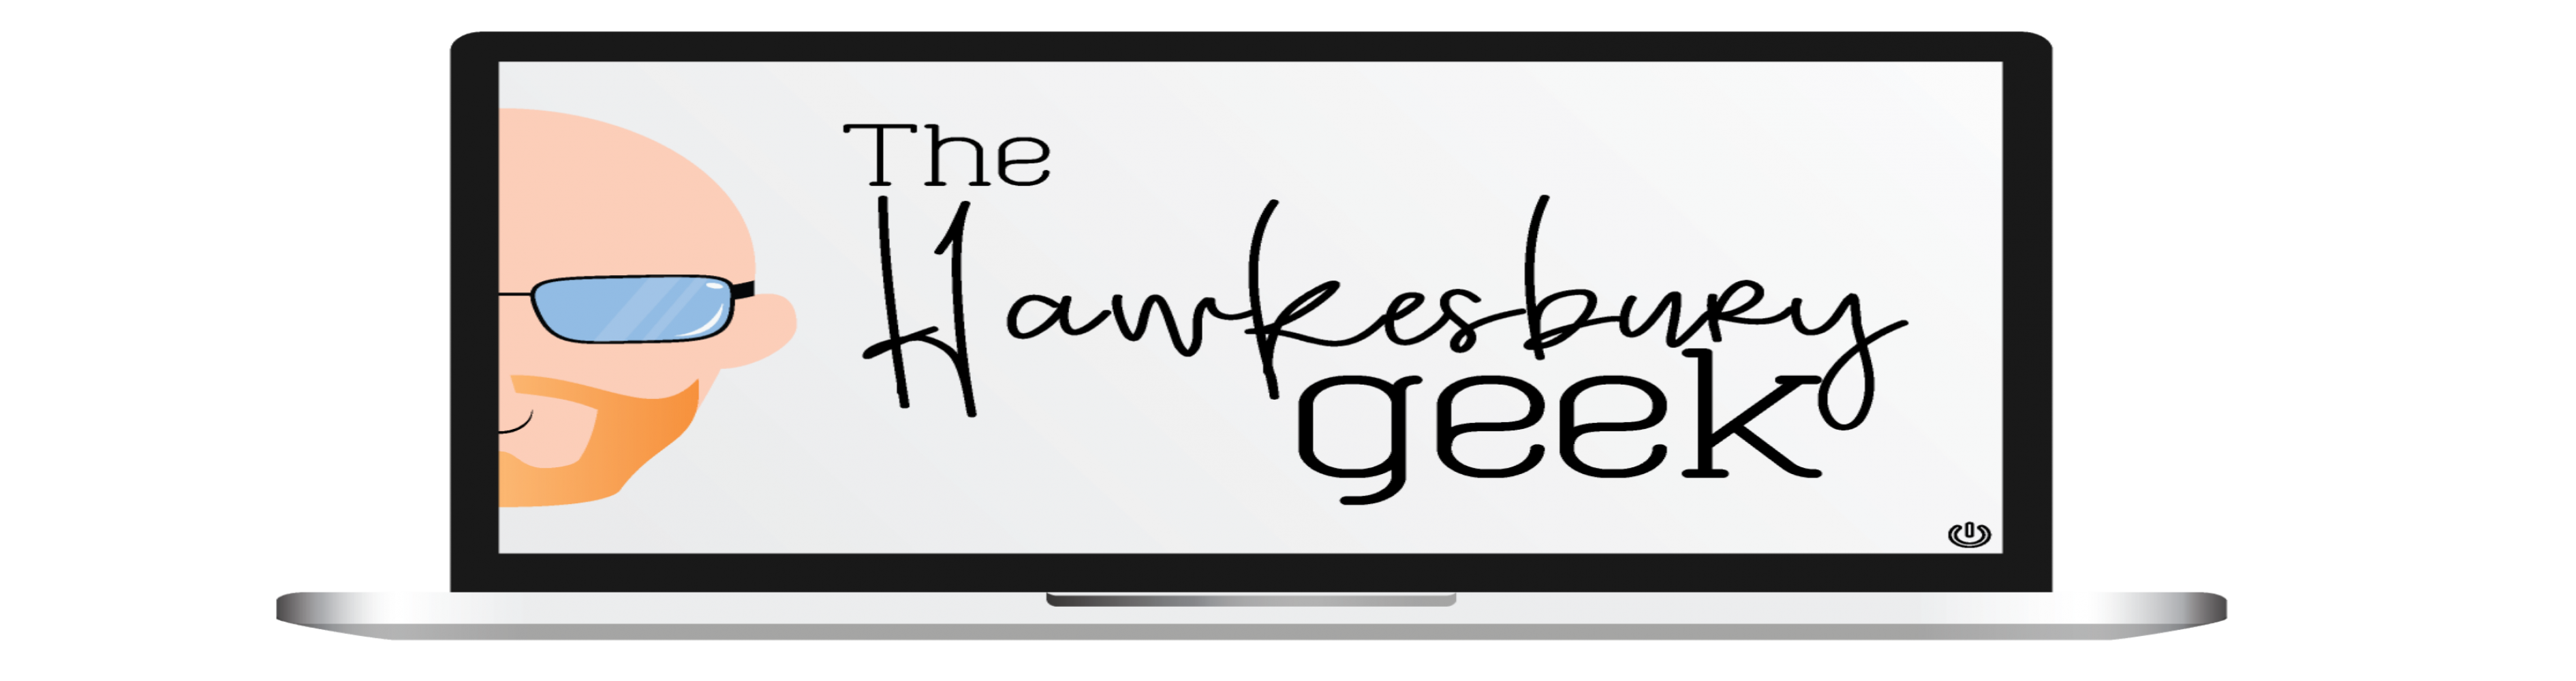 The Hawkesbury Geek